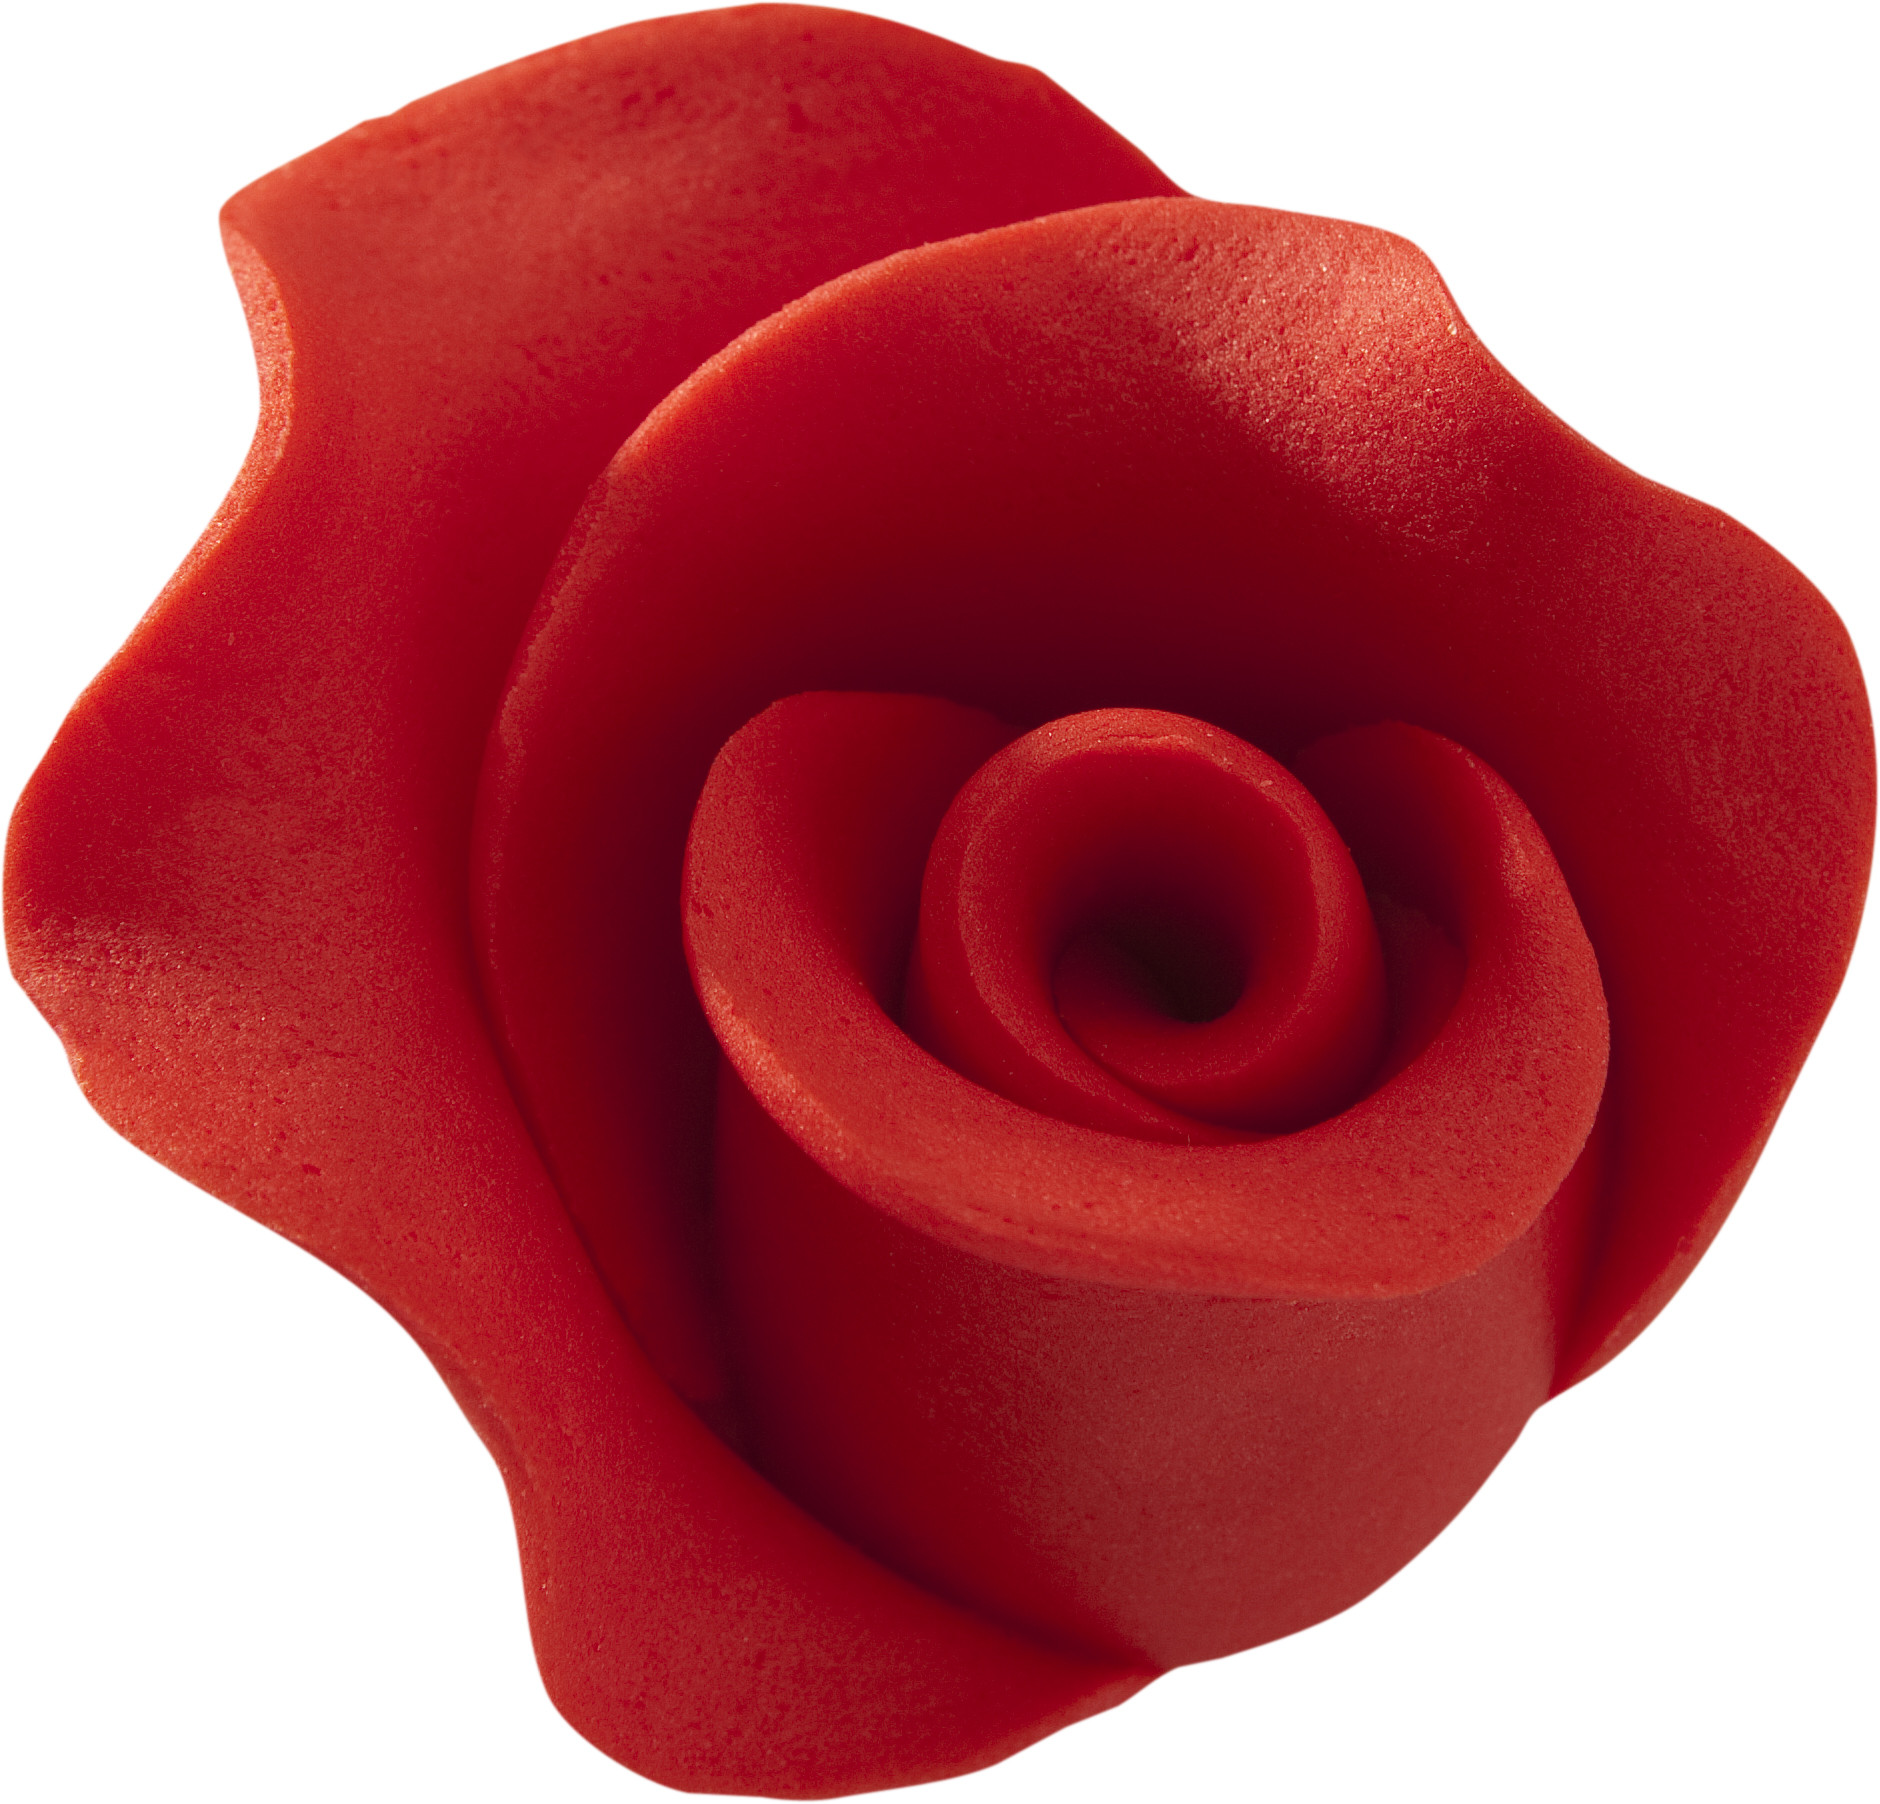 Trandafir din zahar mediu rosu 051302 PJT, set 20 buc